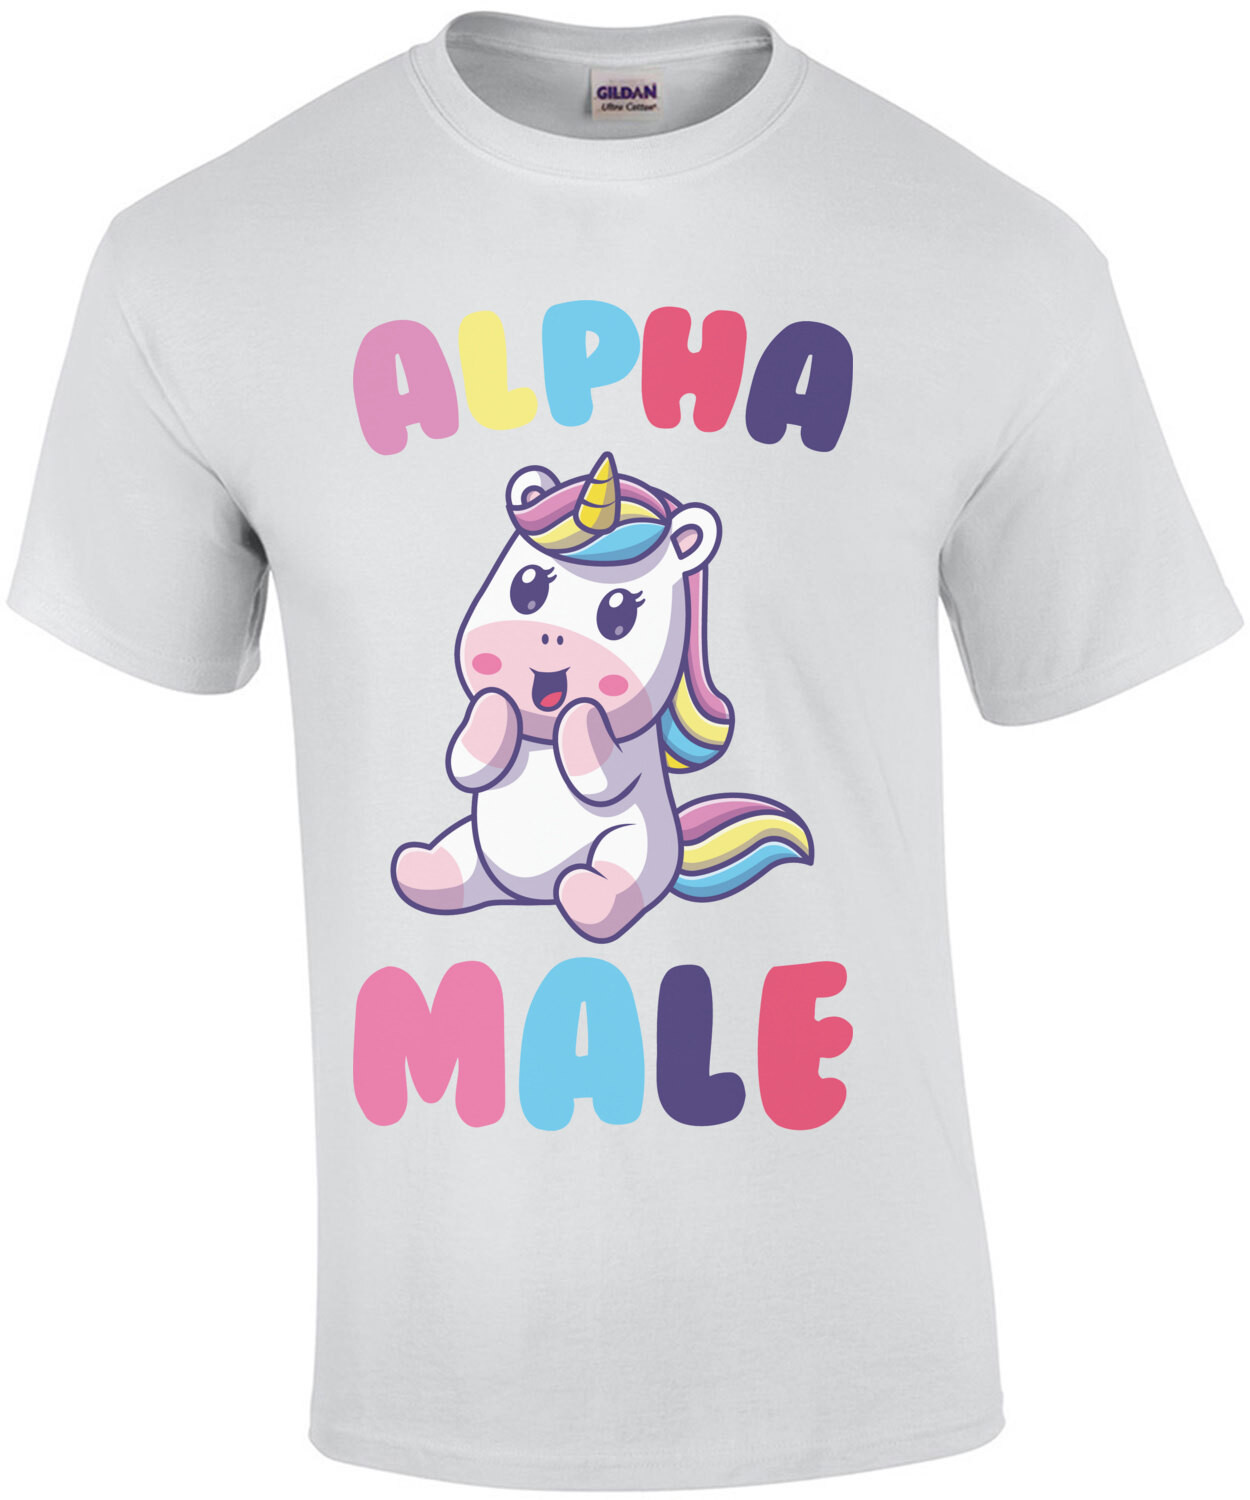 Alpha Male - funny sarcastic t-shirt